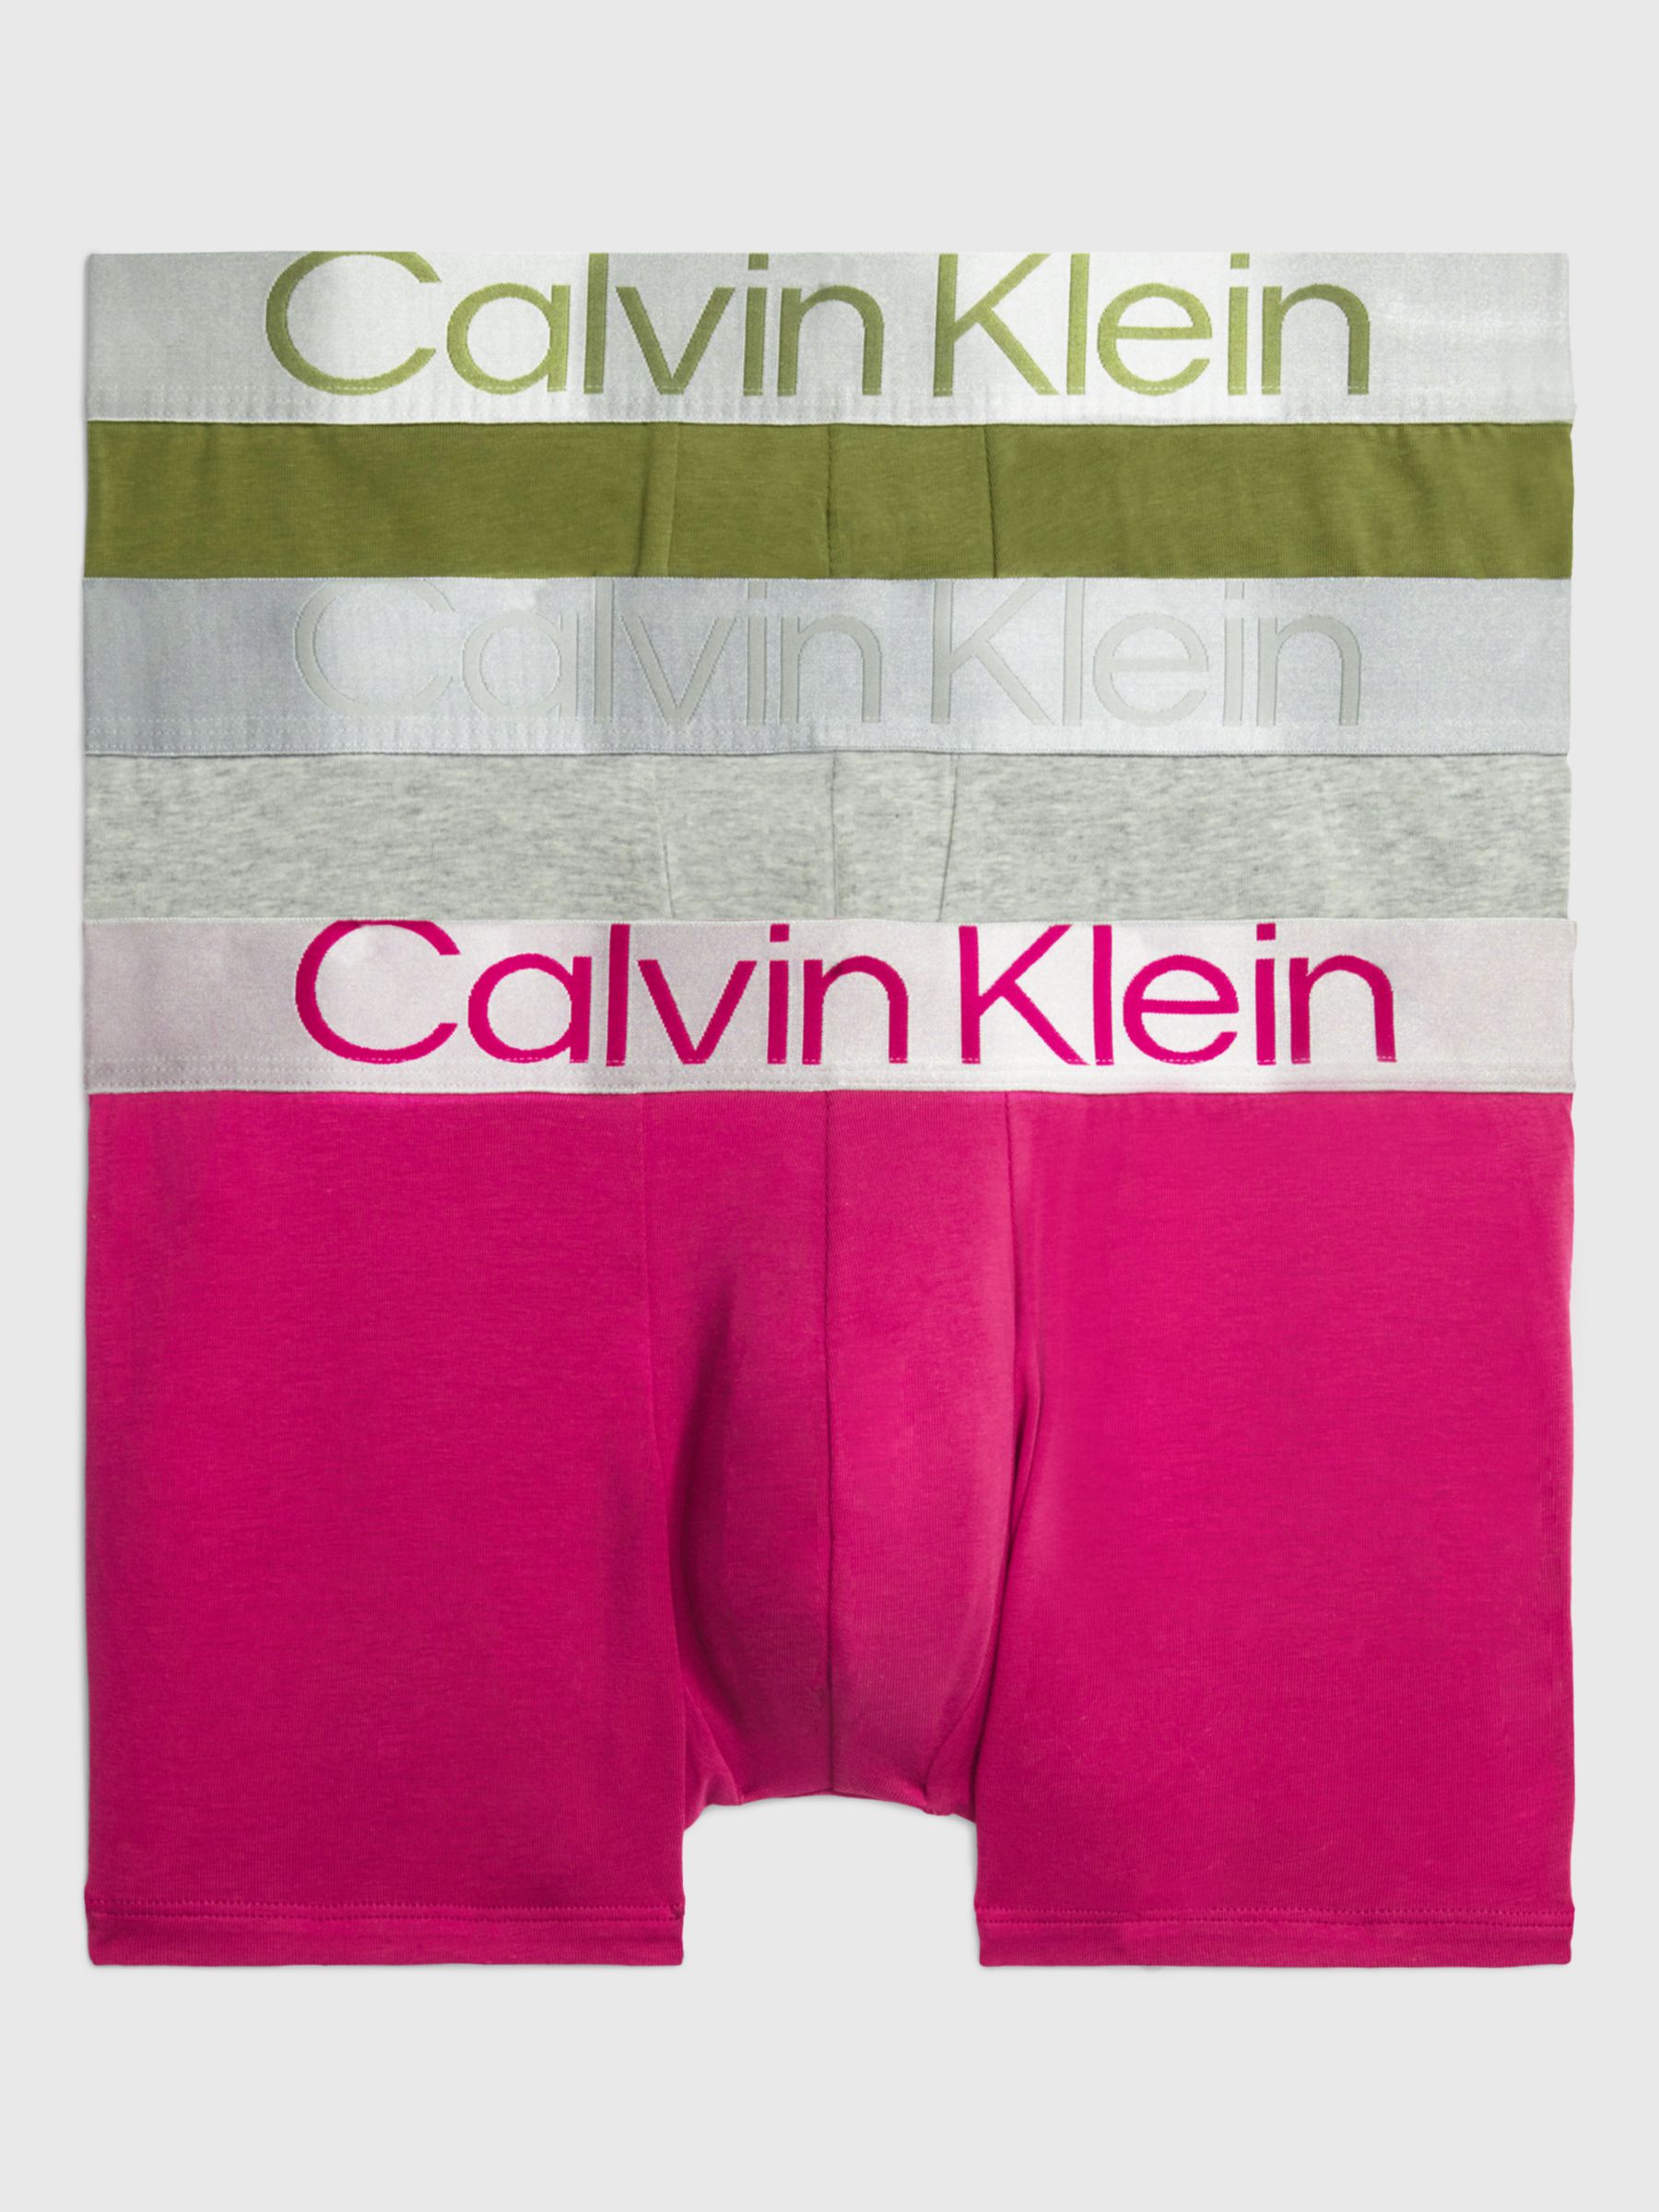 Calvin Klein Steel Cotton Trunks, Pack of 3, Multi, S